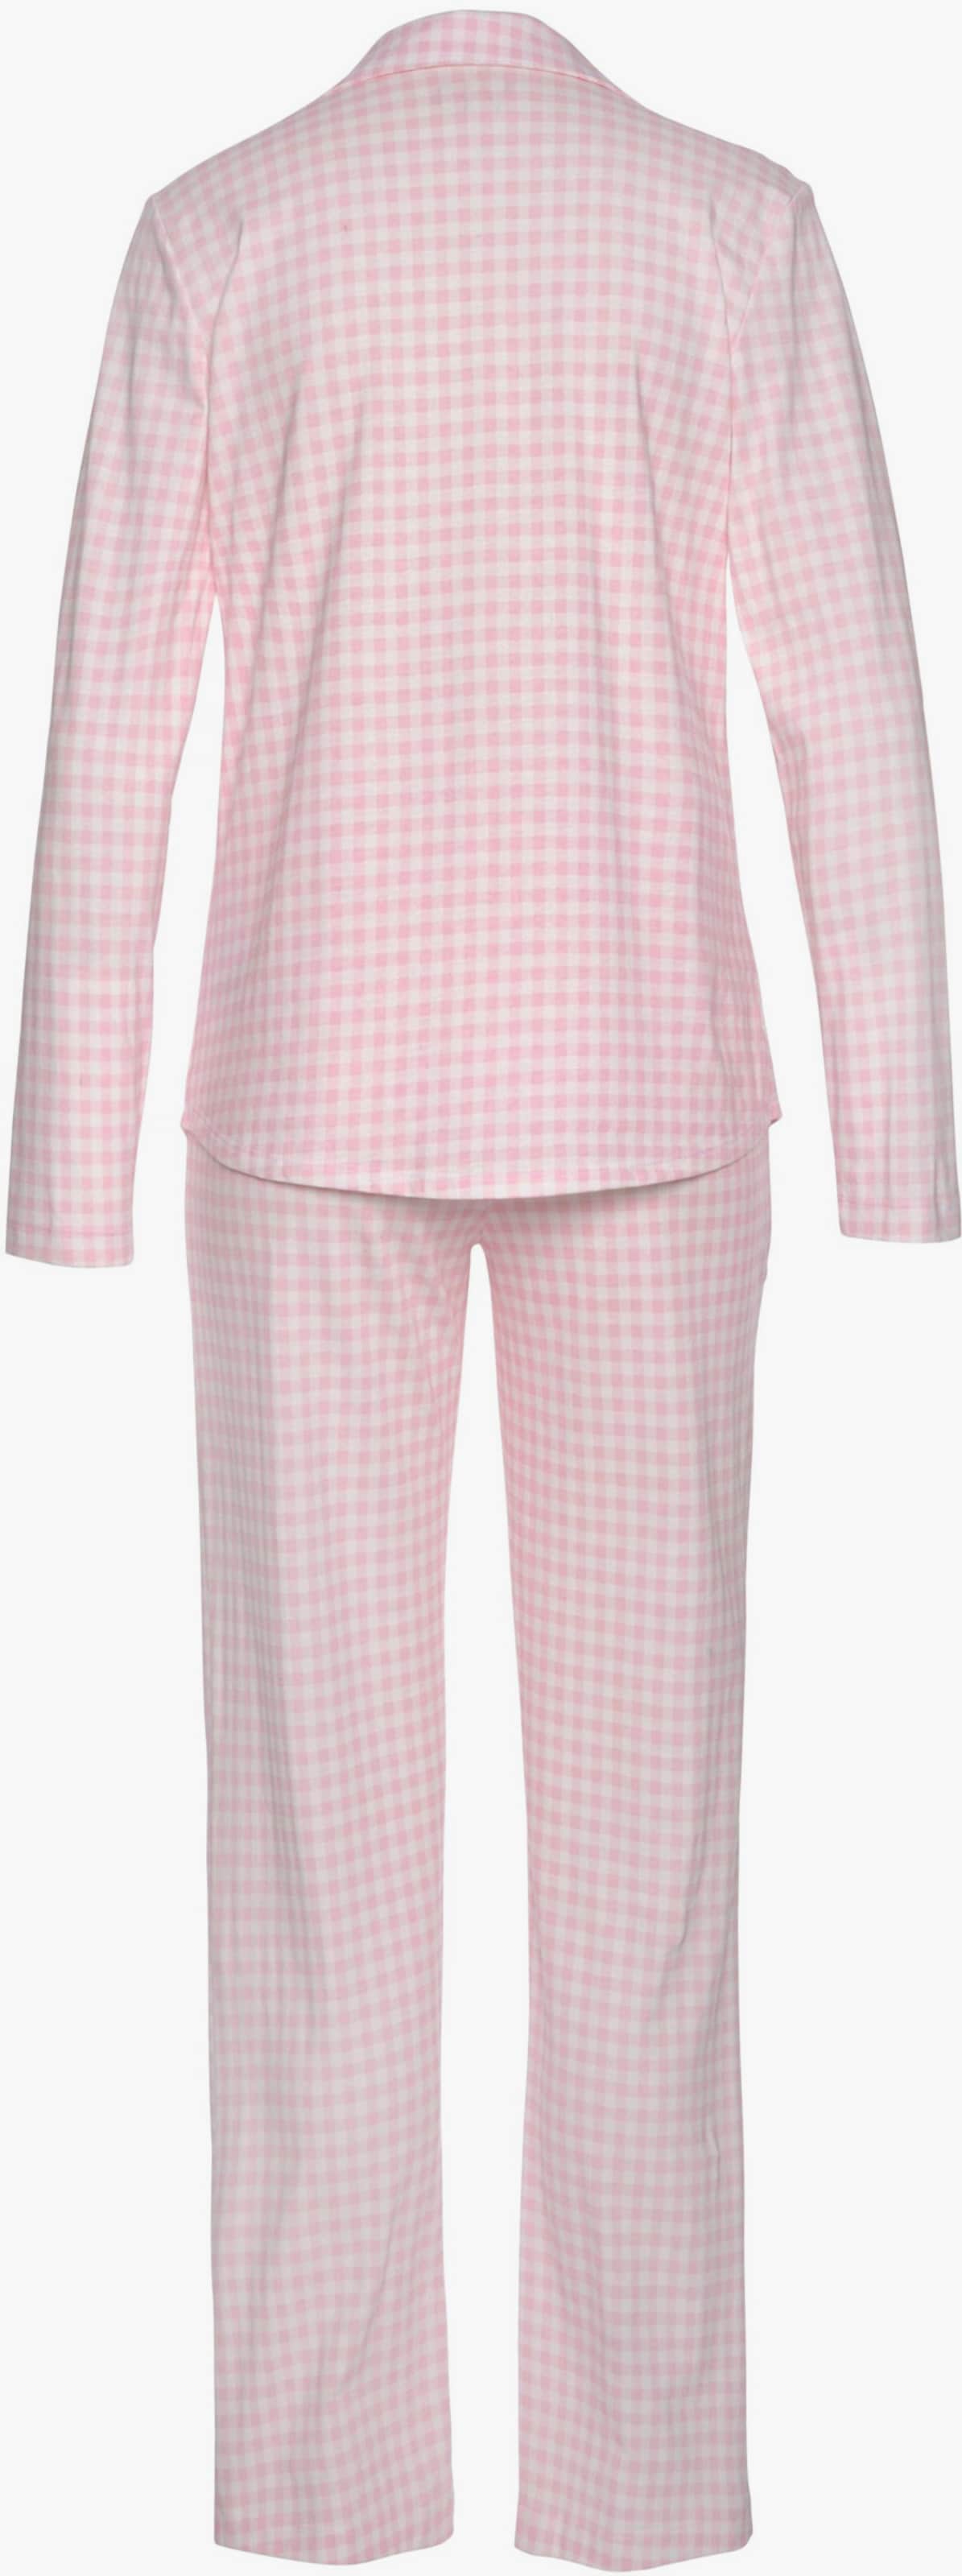 Vivance Dreams Pyjama - rosa-weiß